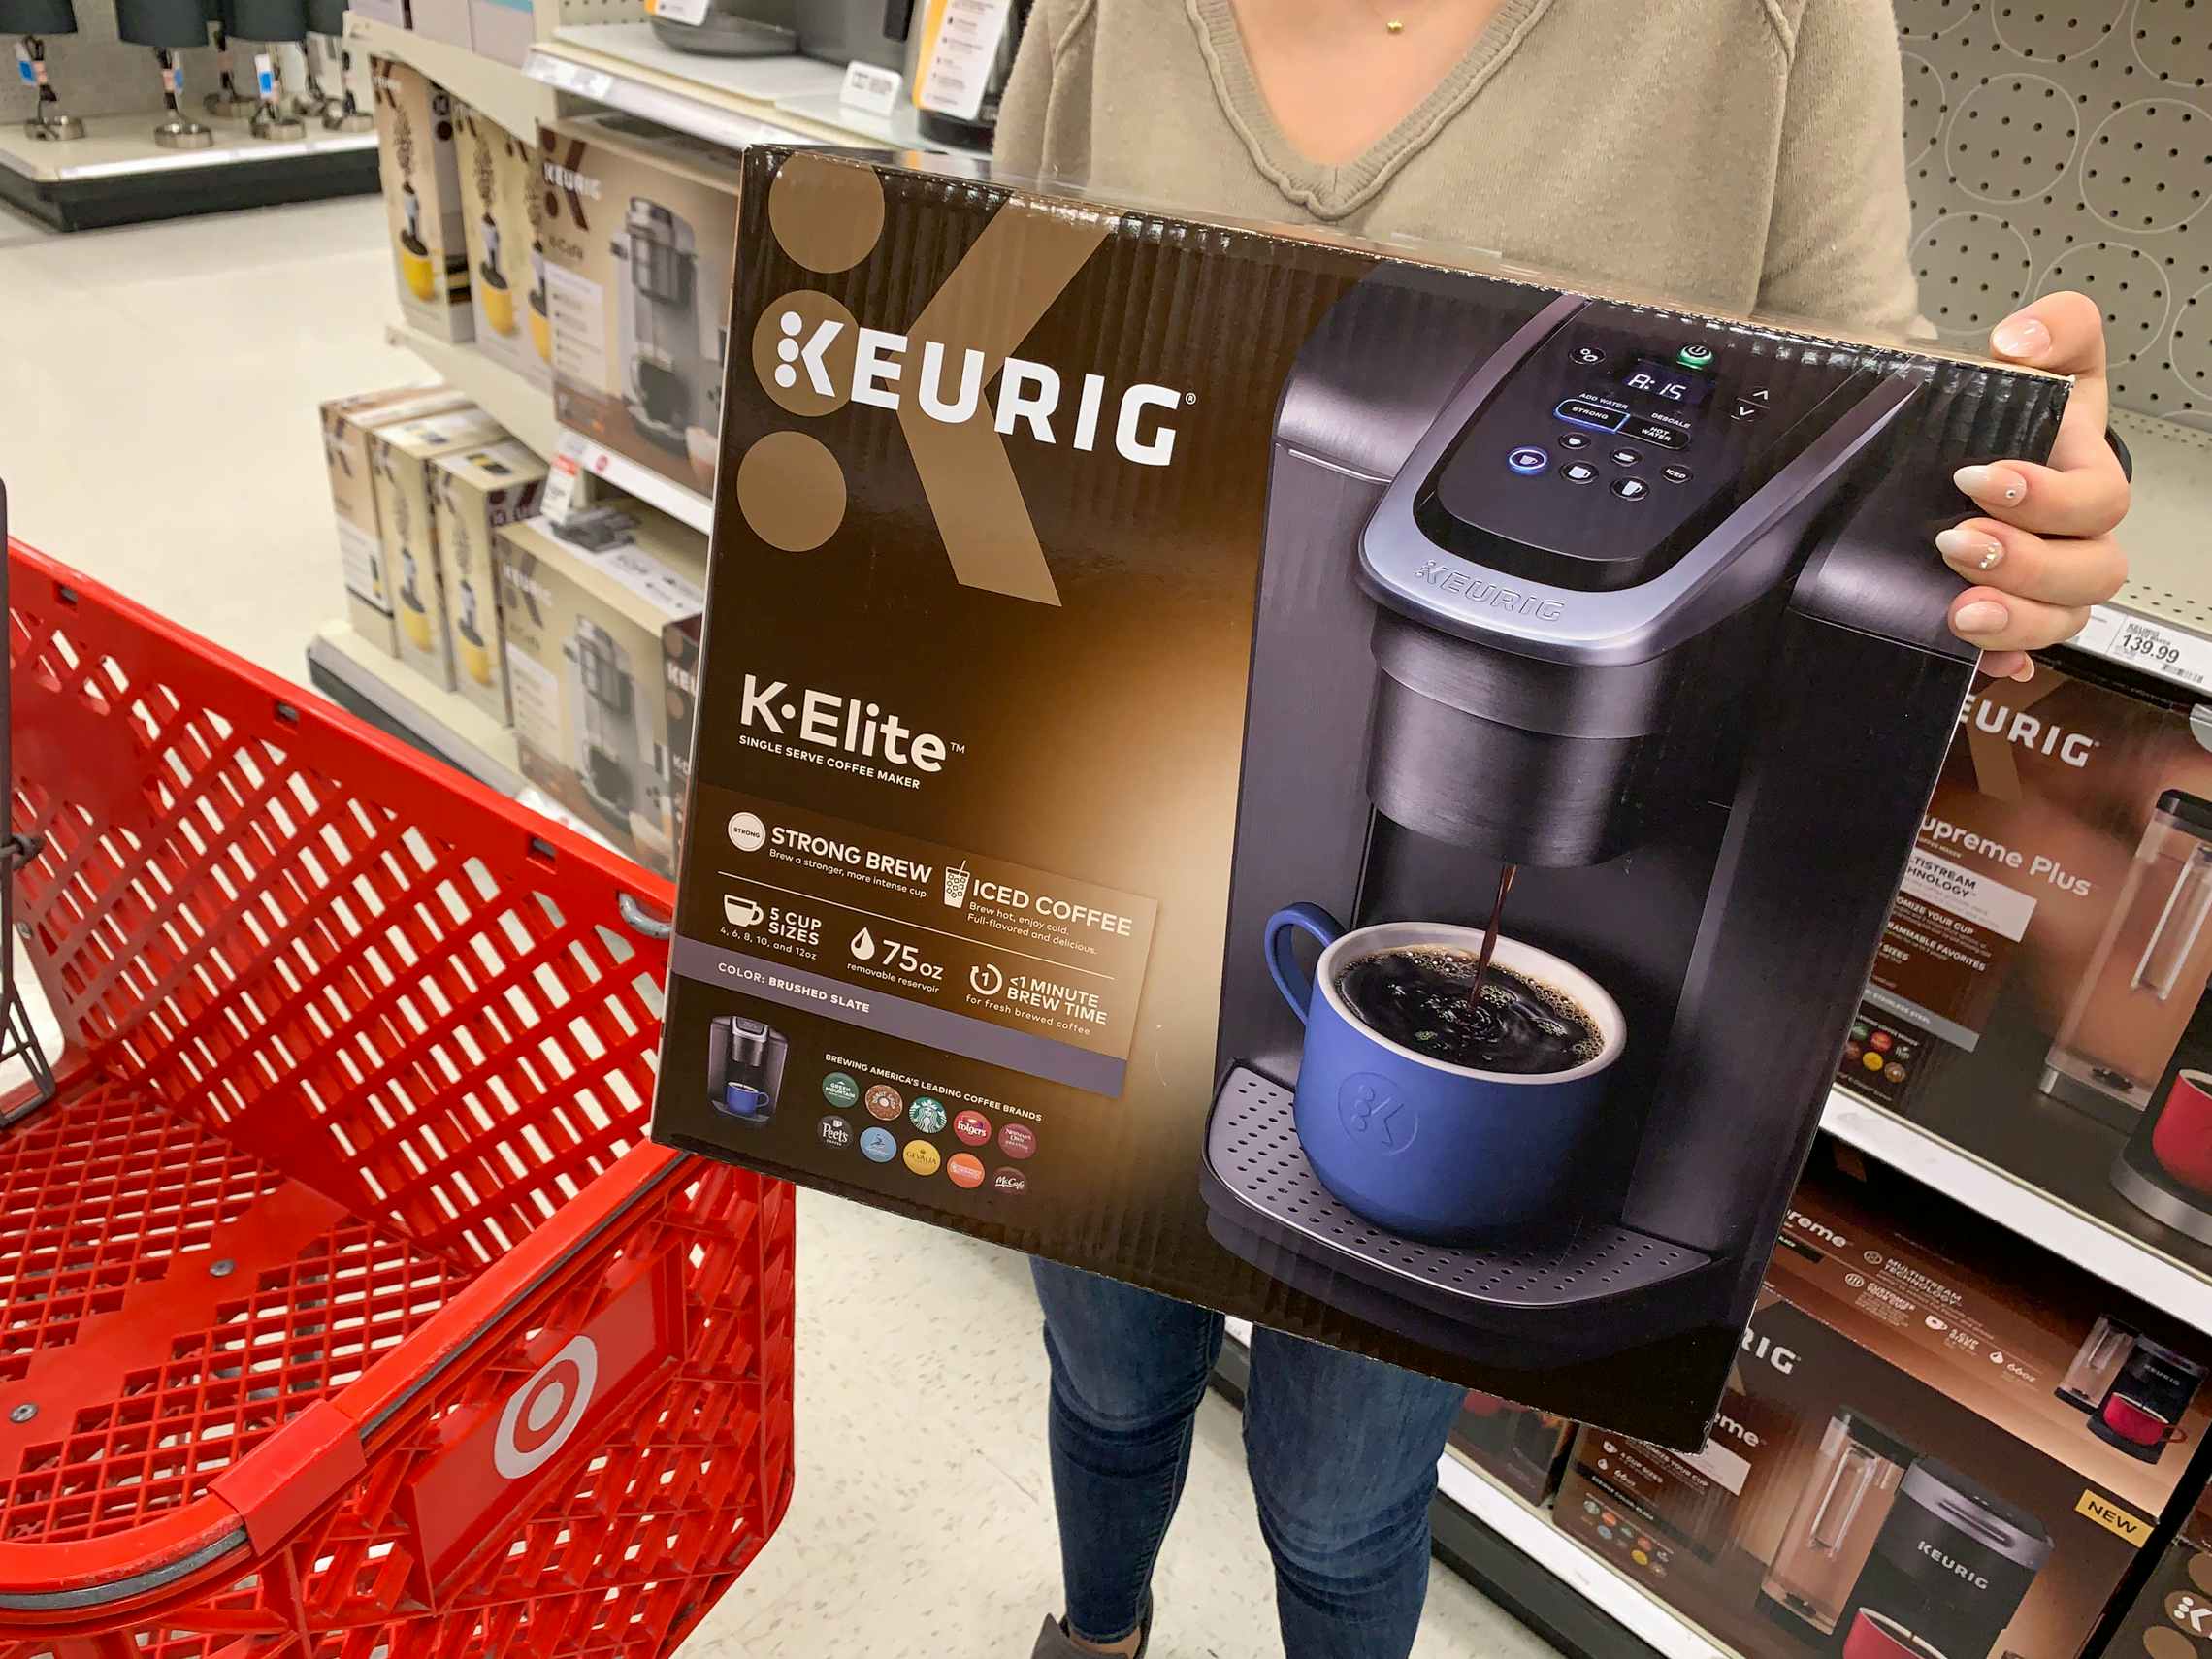 Keurig's K-Duo brews K-Cups and ground coffee, now $79 (Reg. $100+)